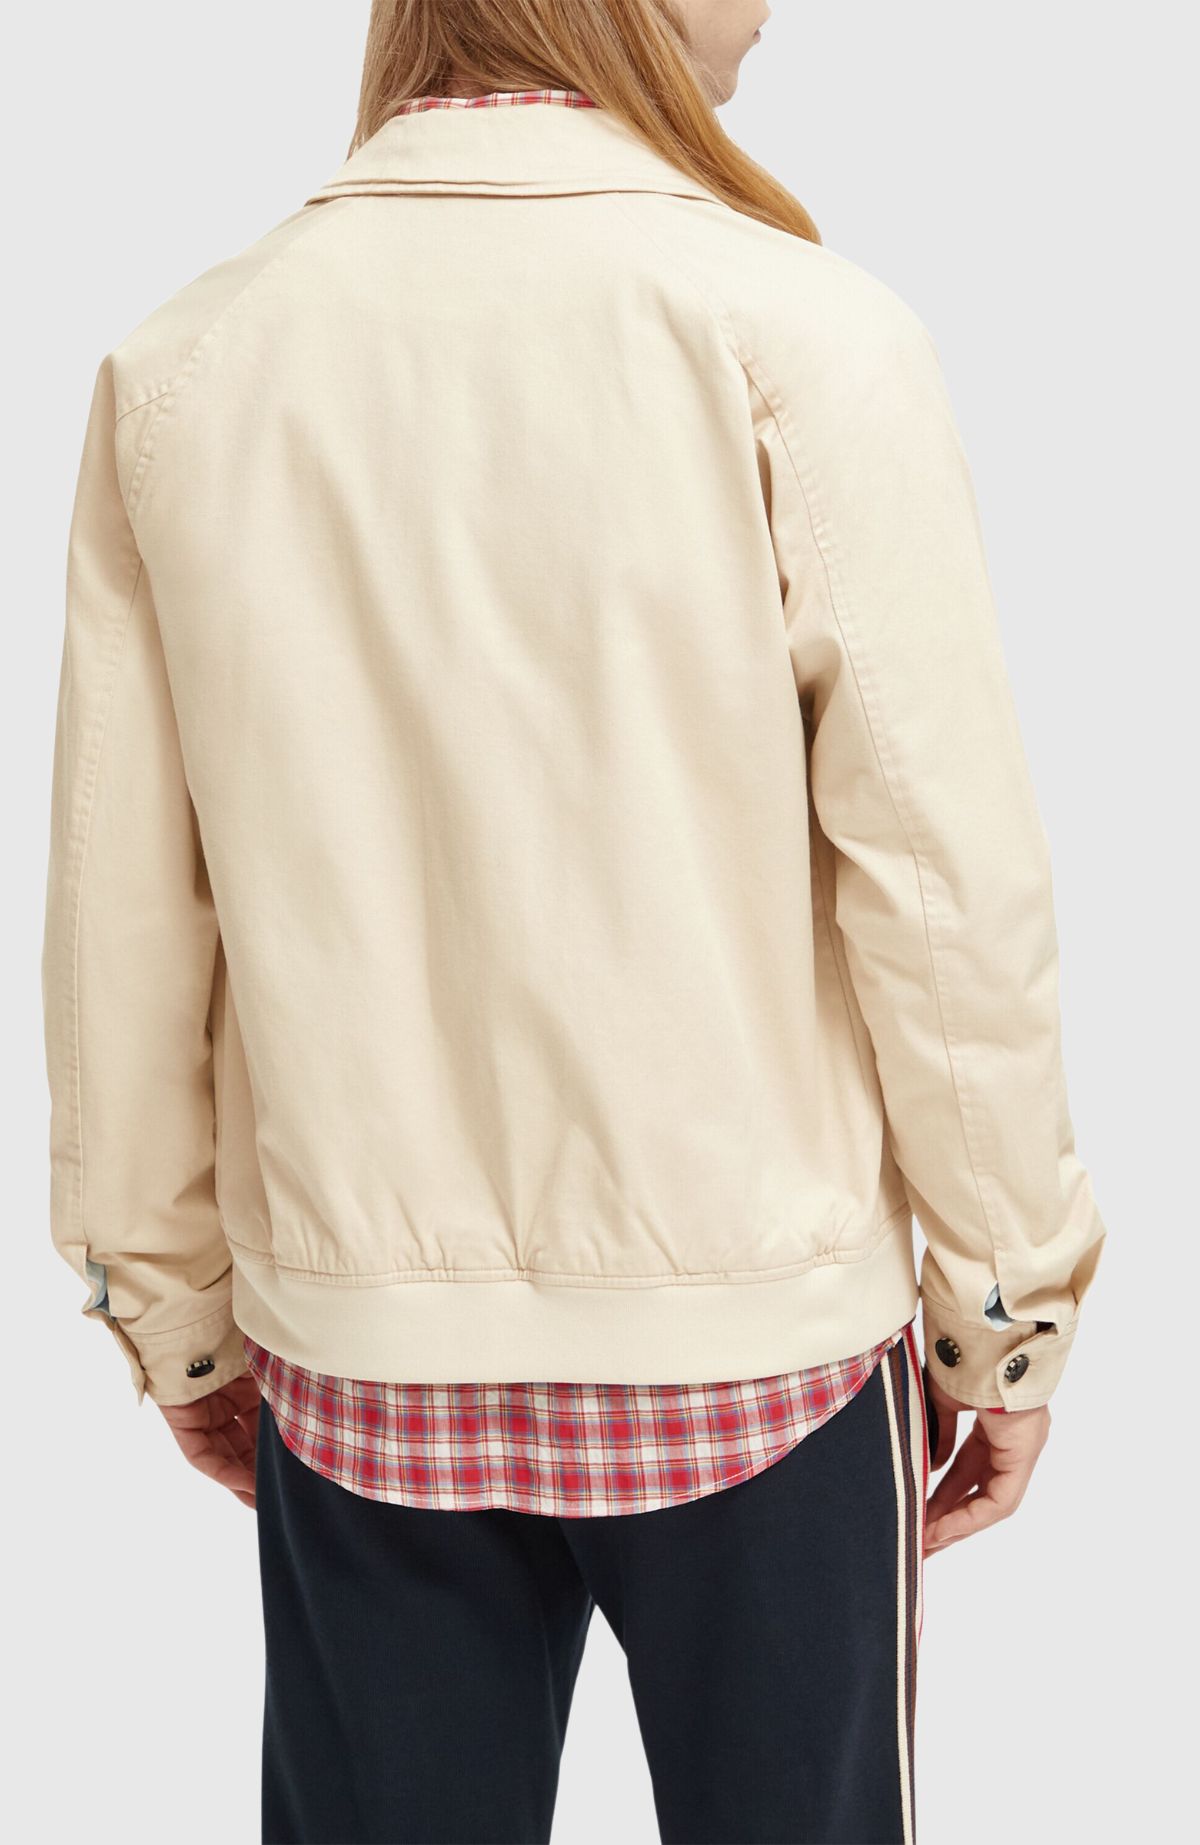 Cotton Blouson Jacket